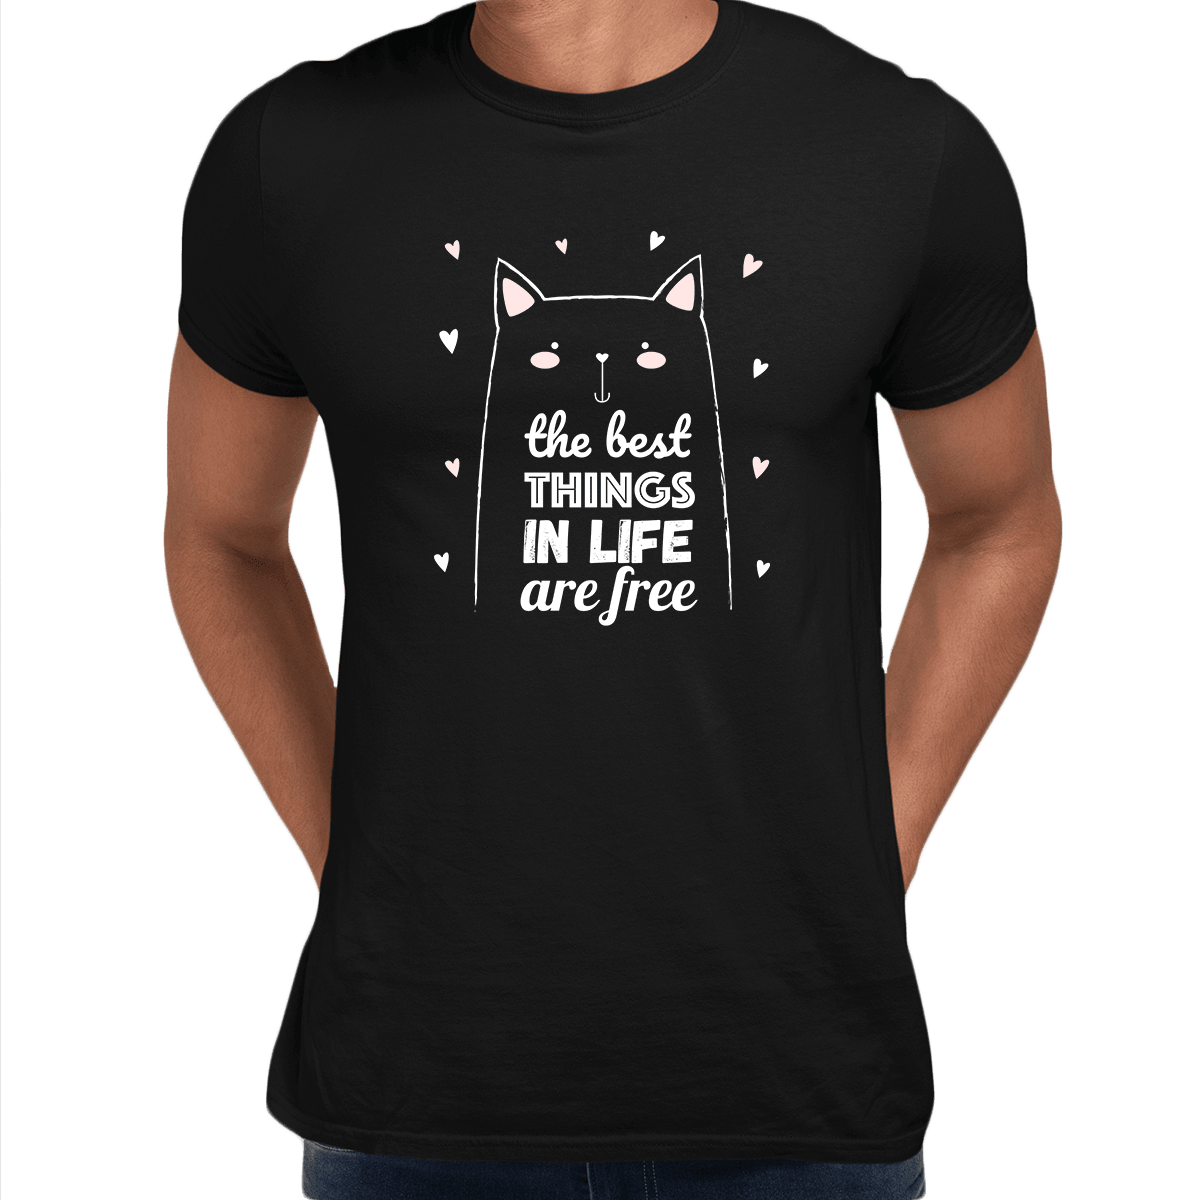 Cat Funny Animal Shirt If You Can Dream it You can do it Unisex T-shirt - Kuzi Tees